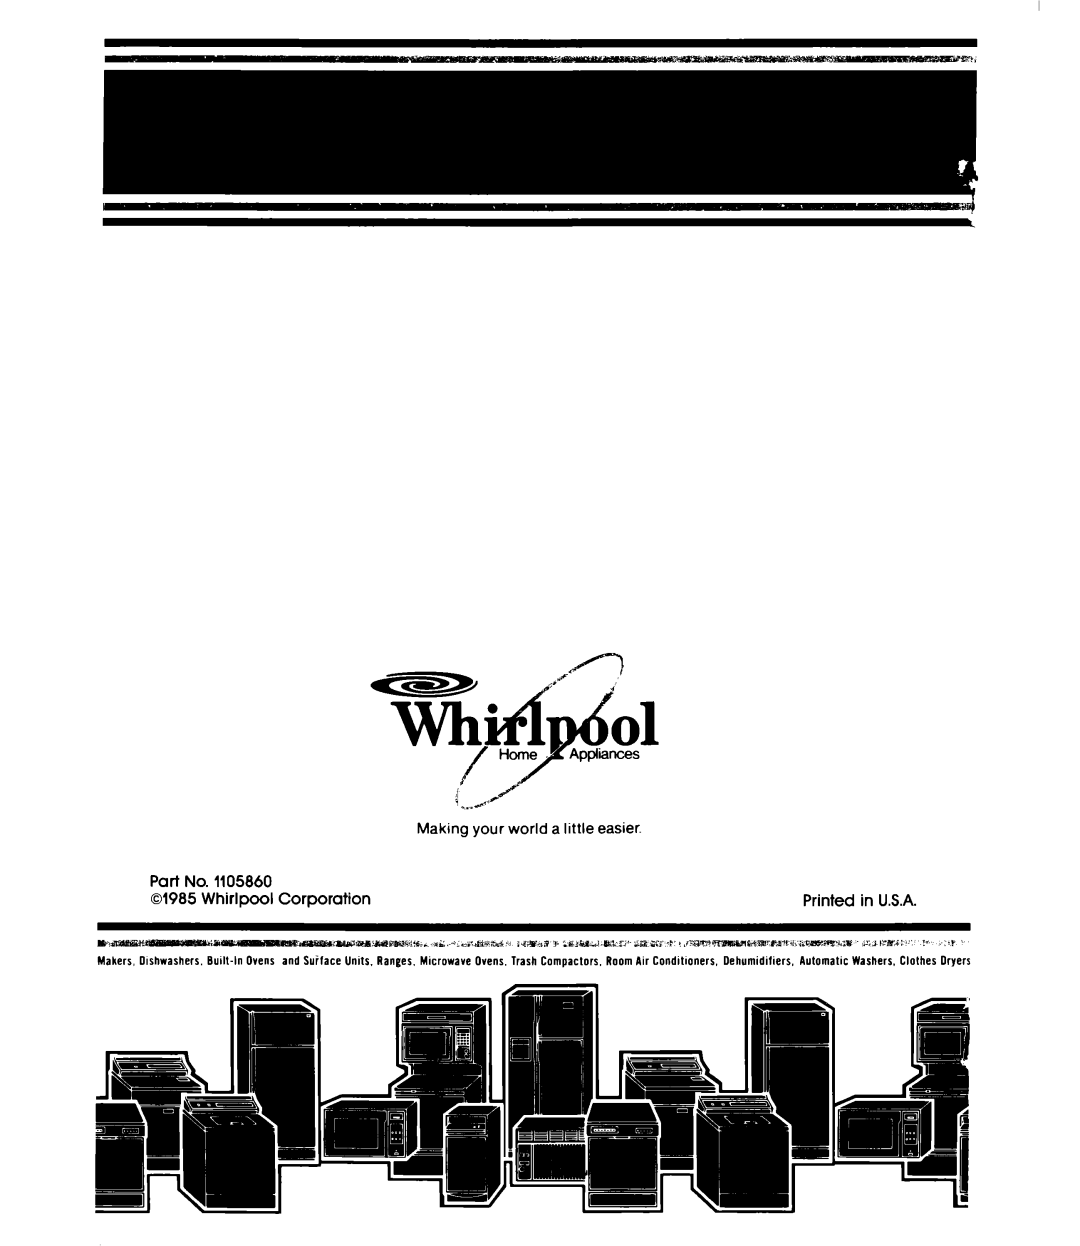 Whirlpool ET16AK manual 01985, Whirlpool, Corporation, in U.S.A 